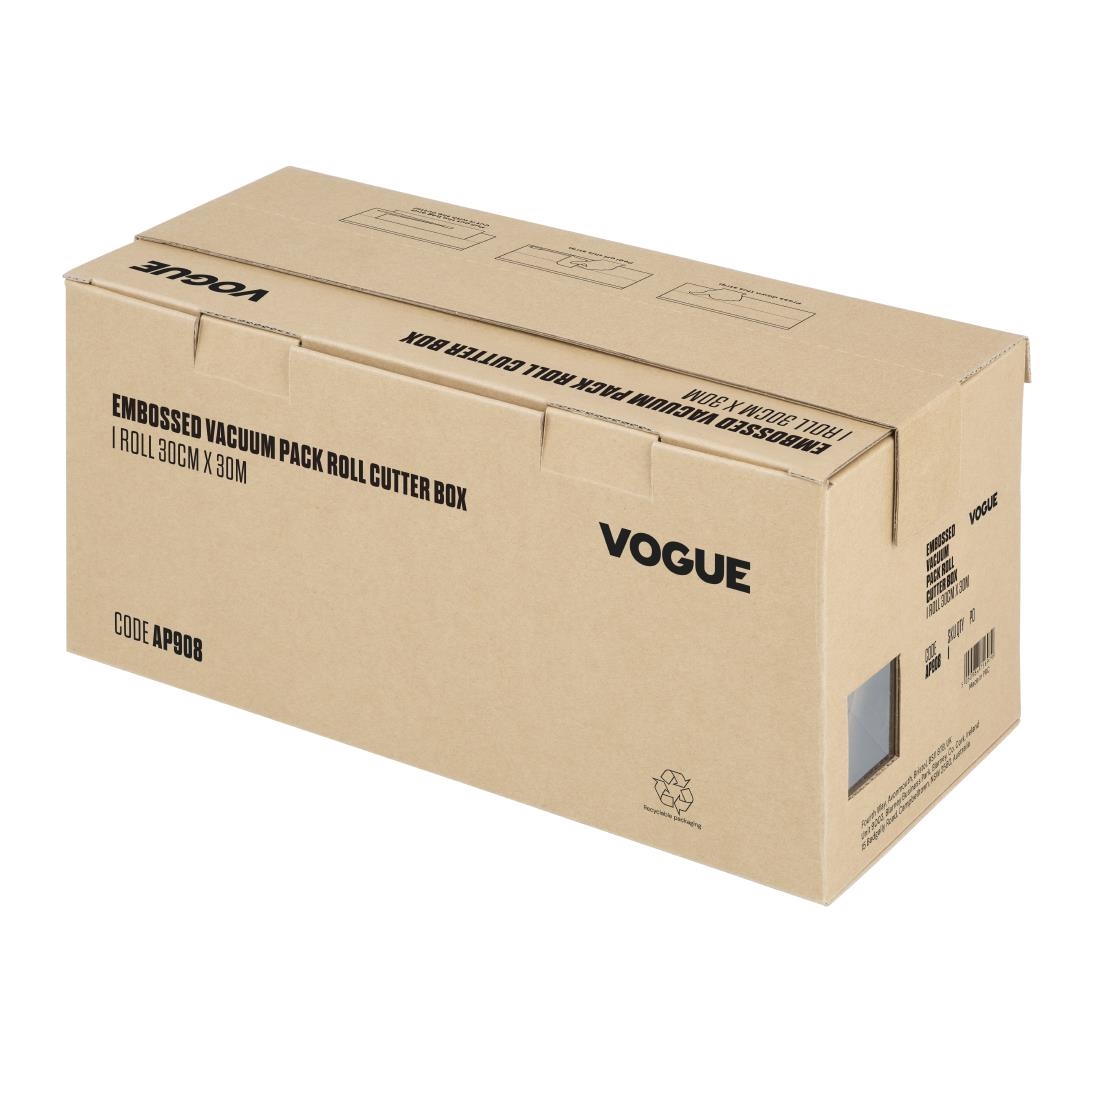 Vogue vacuümverpakkingsrol met snijbox (reliëf) 300 mm breed